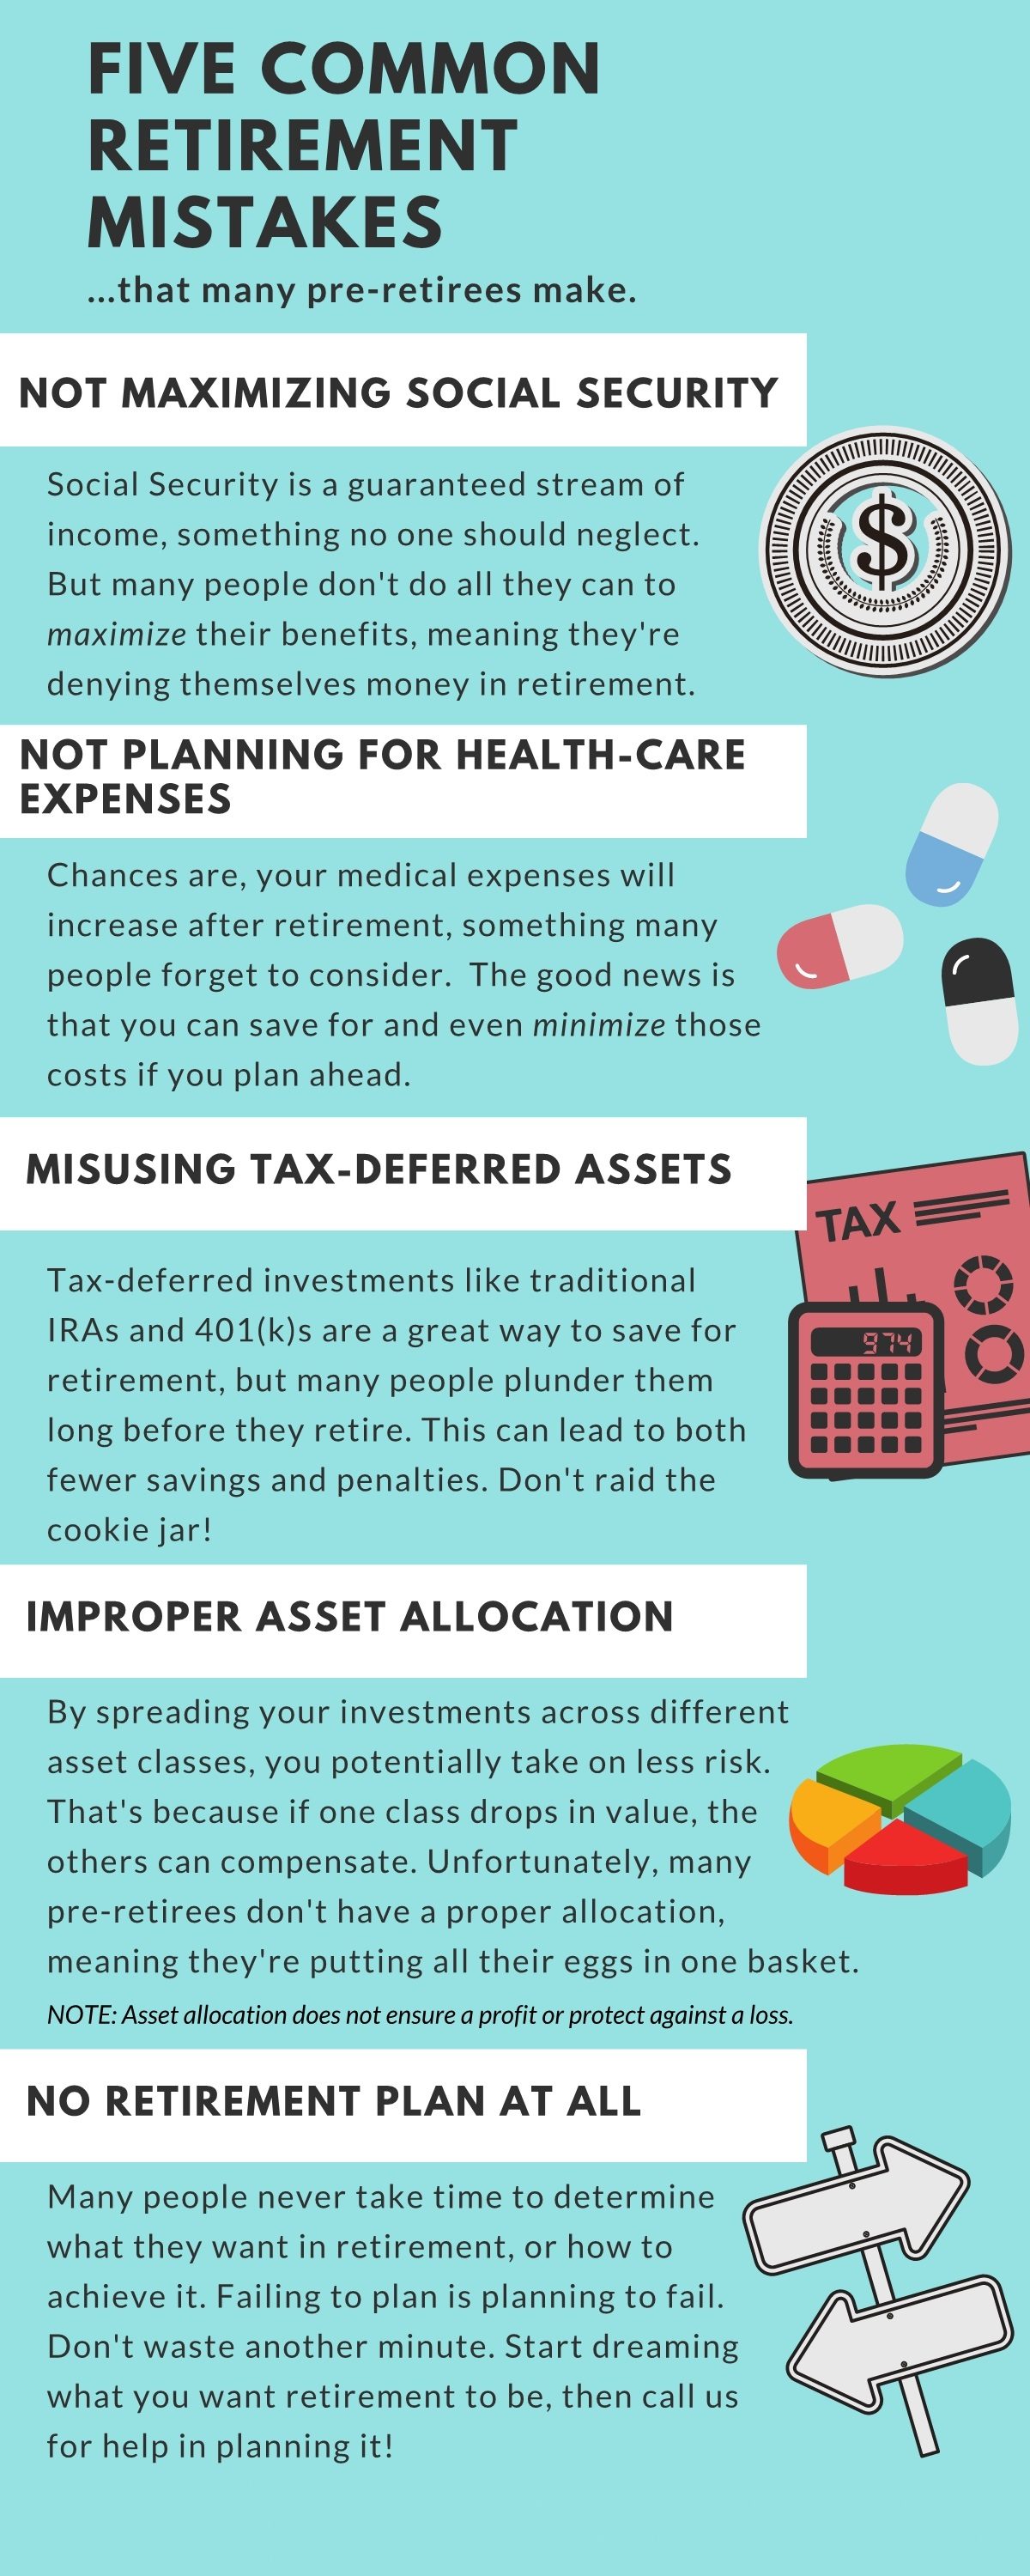 Five Common Retirement Mistakes